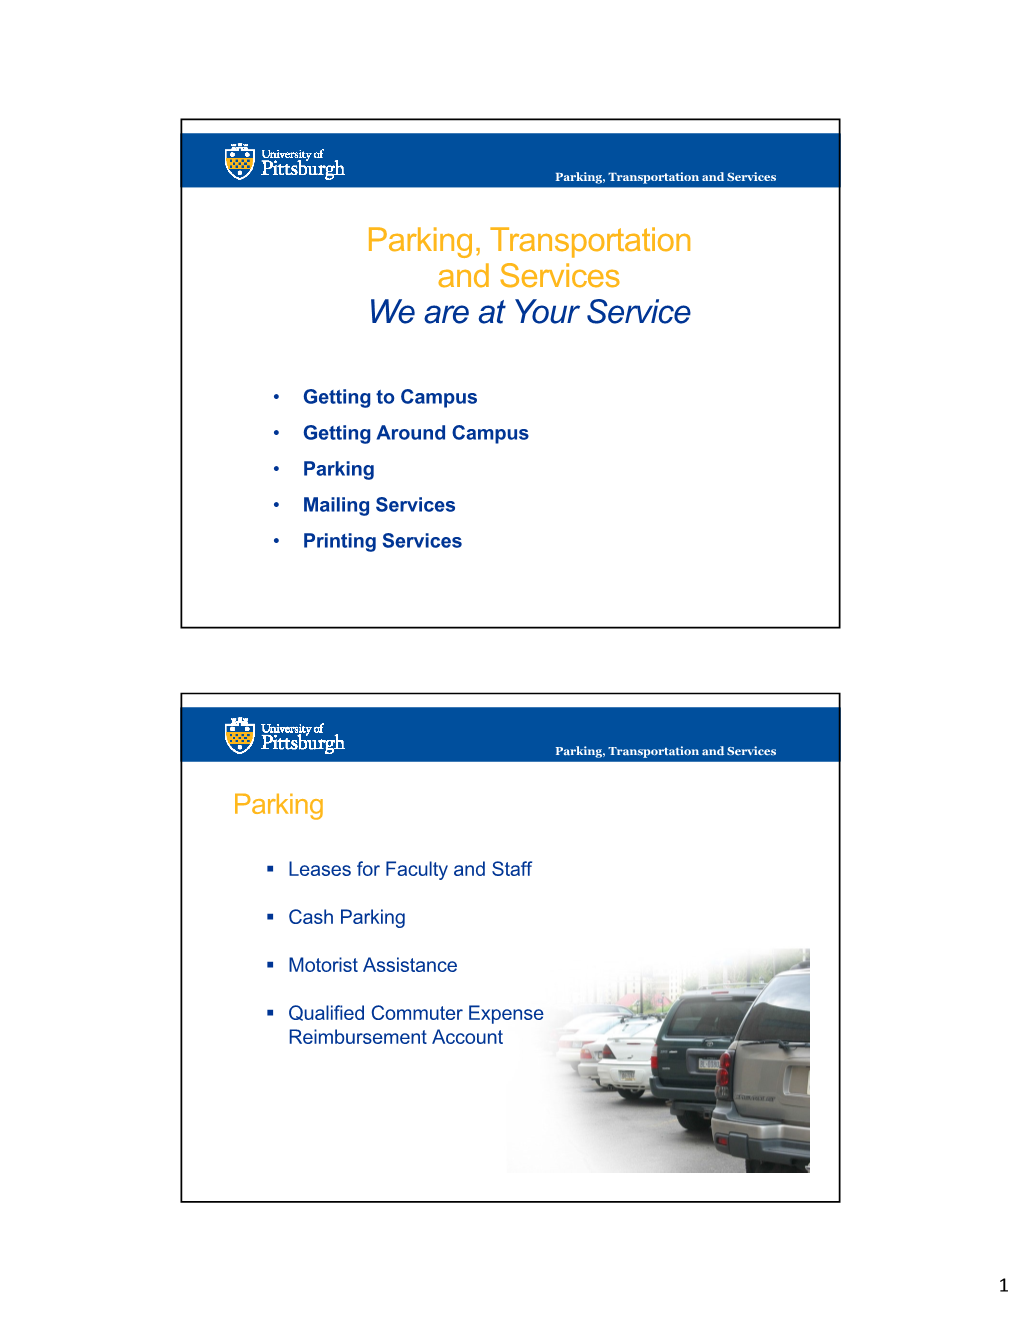 Parking & Transportation Services